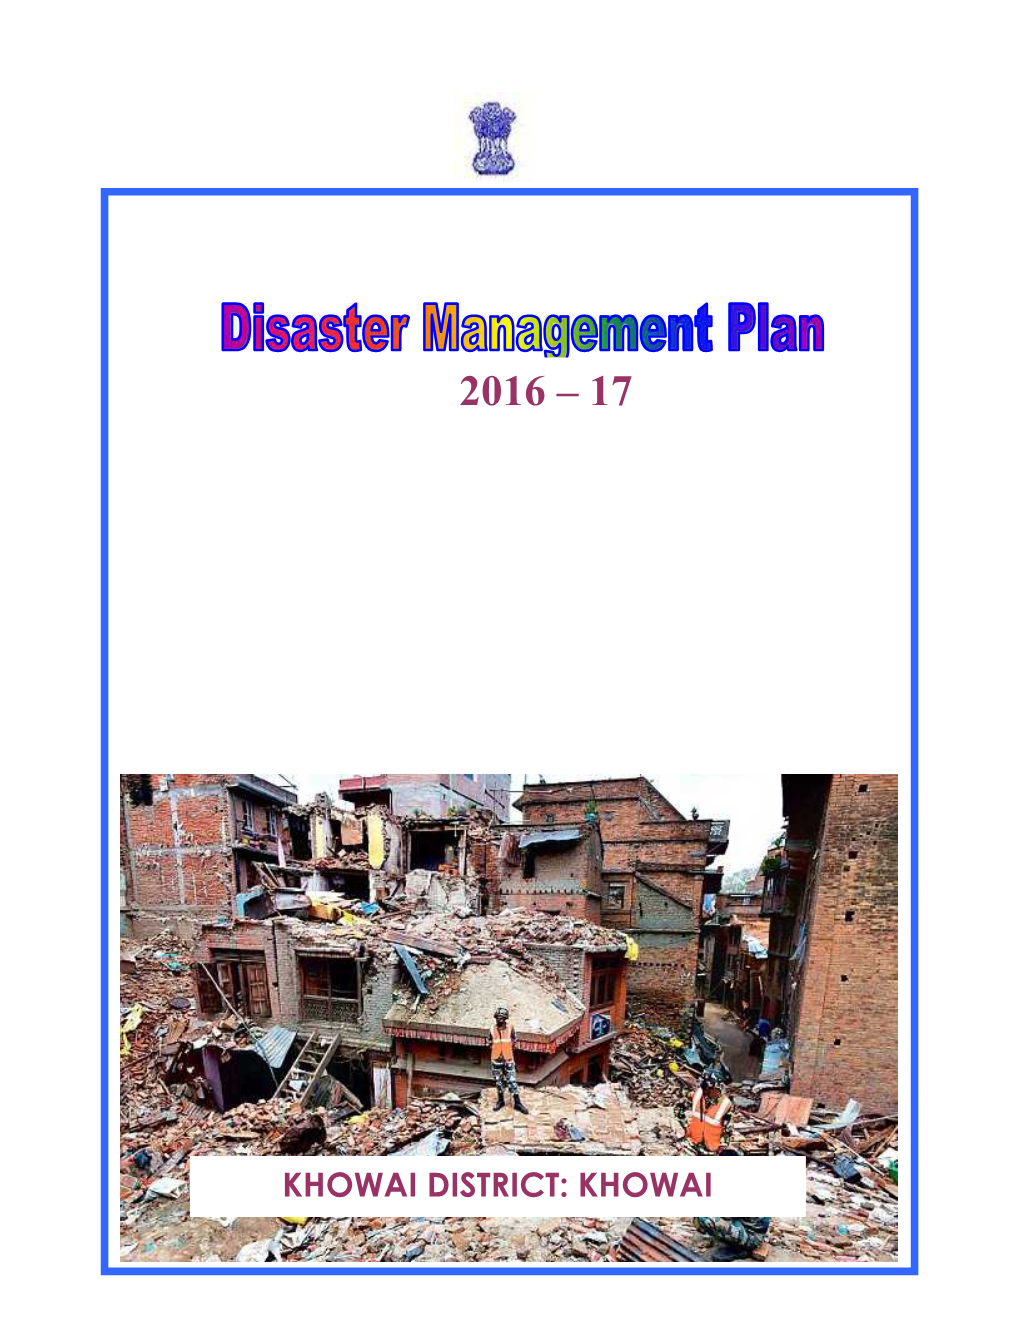 District Disaster Management Plan (2016-17) Khowai District